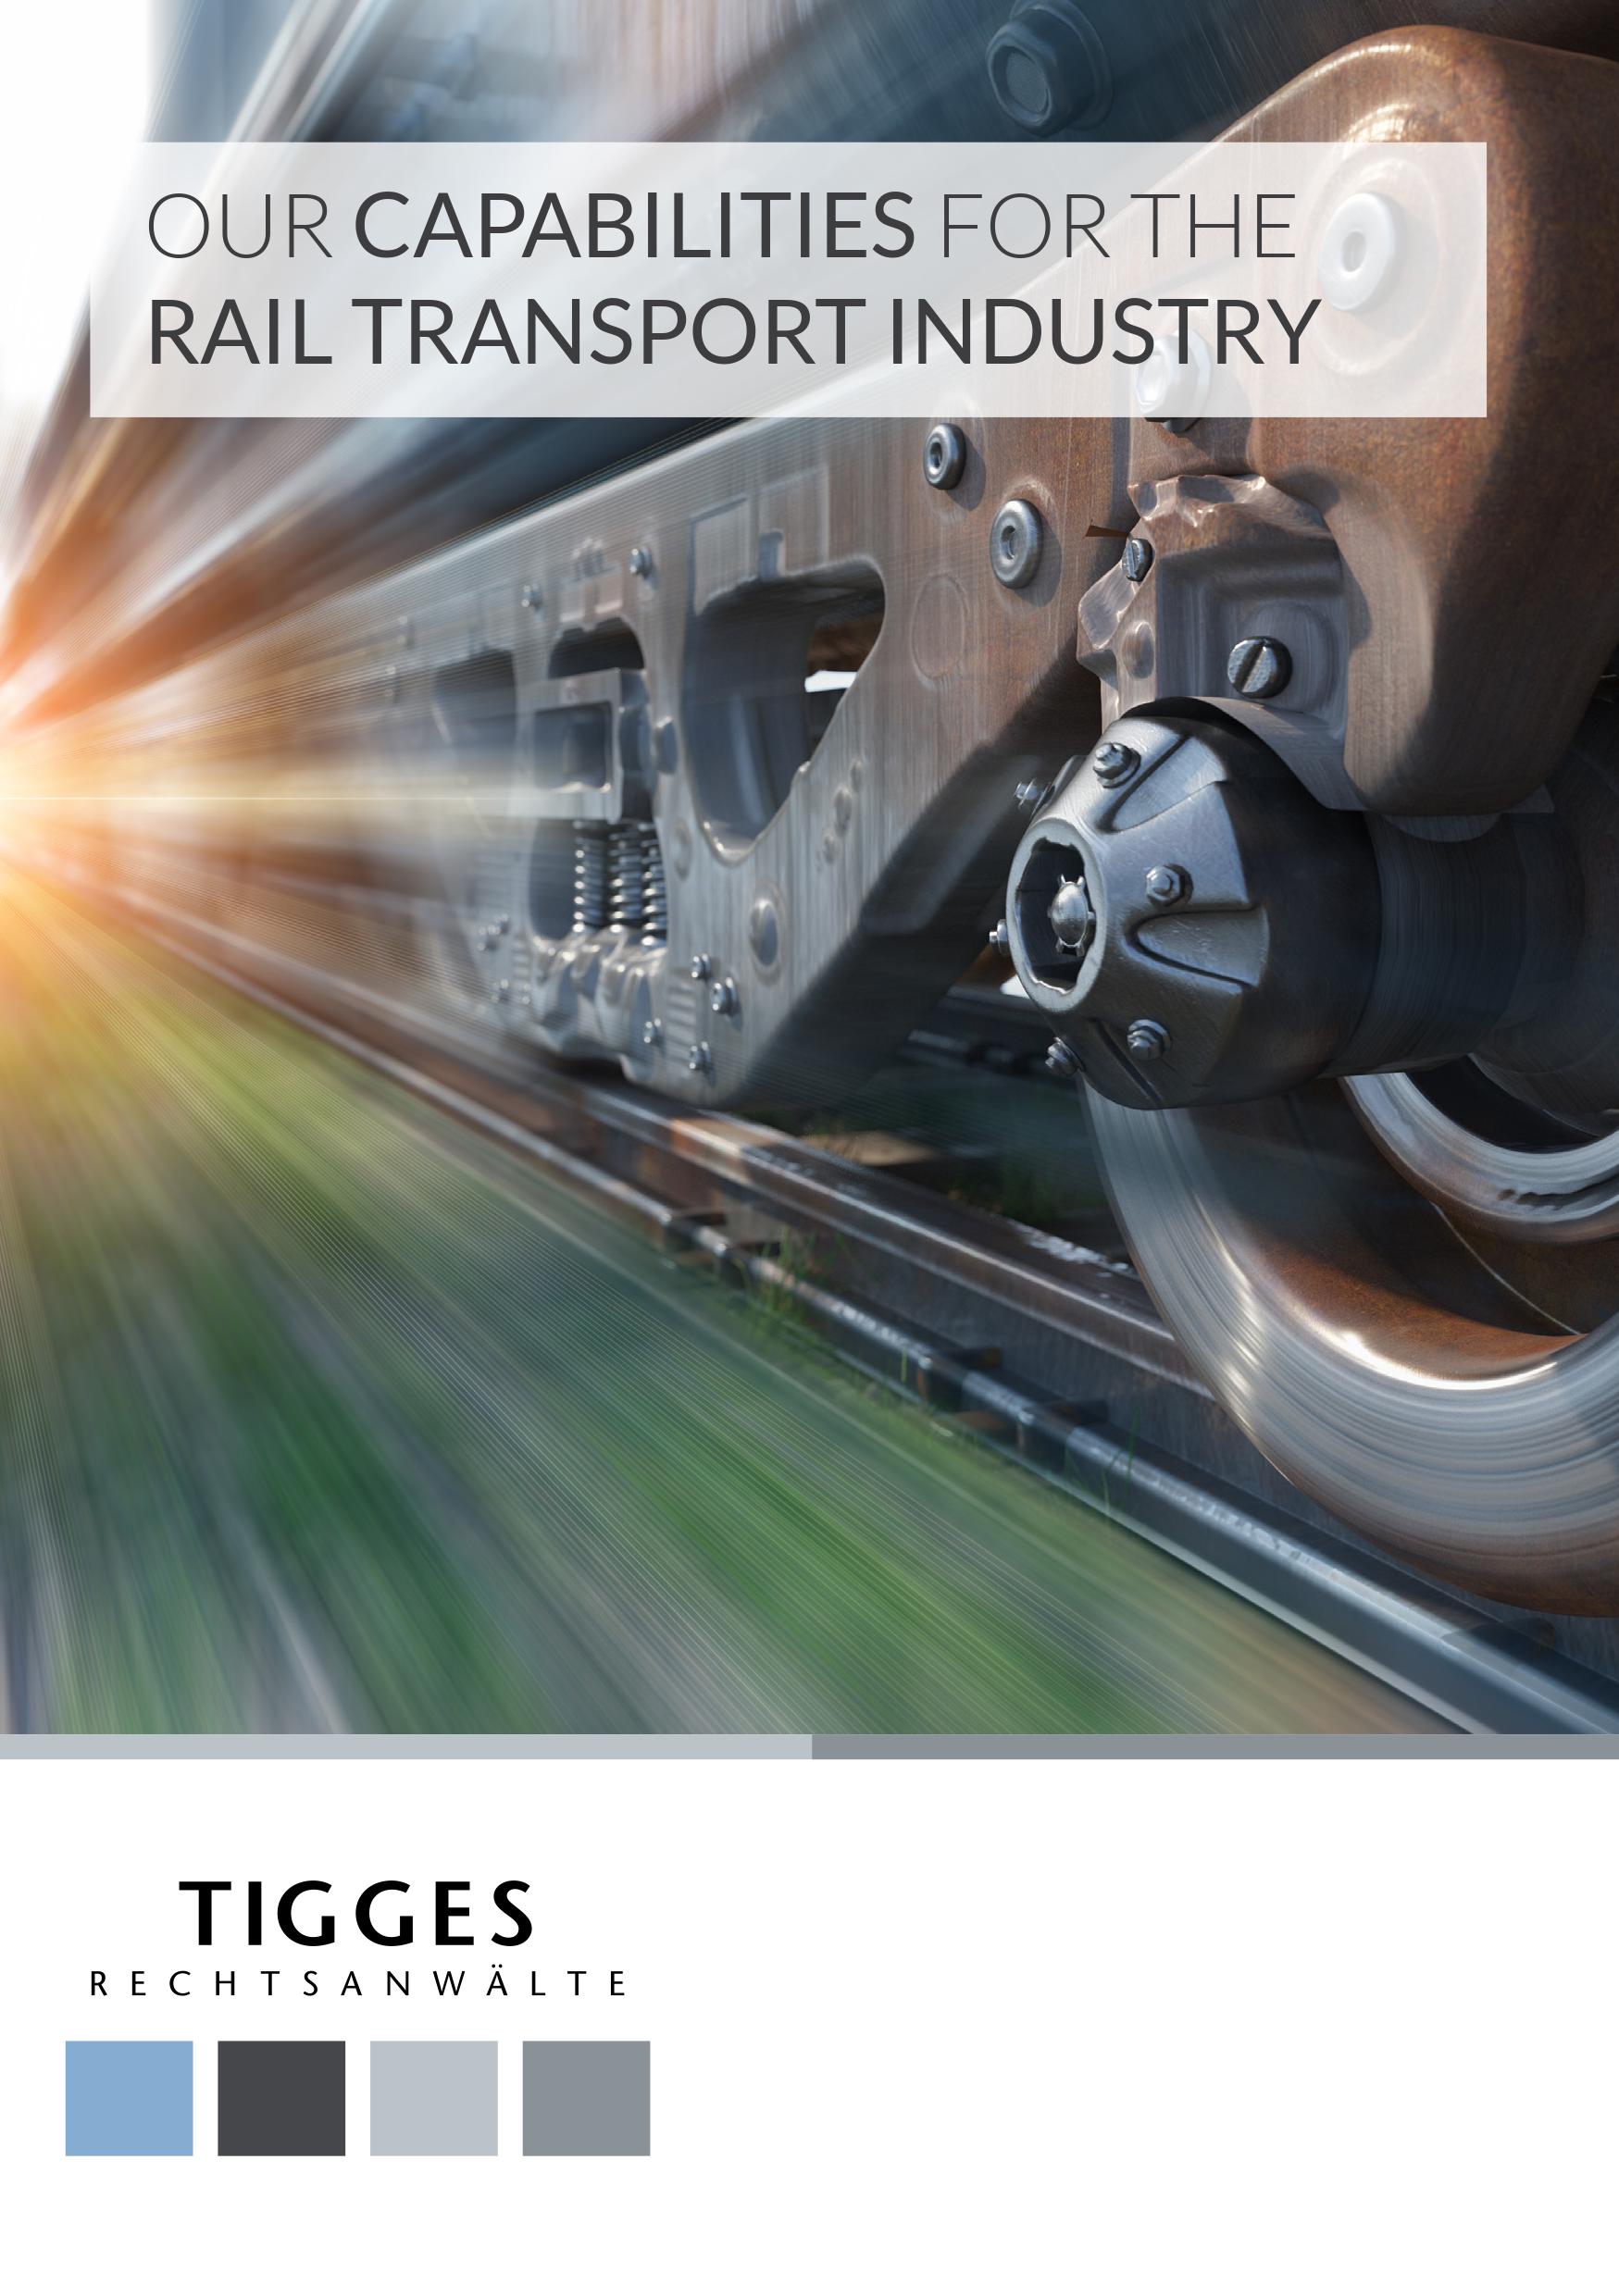 TIGGES Rail transport capabilities